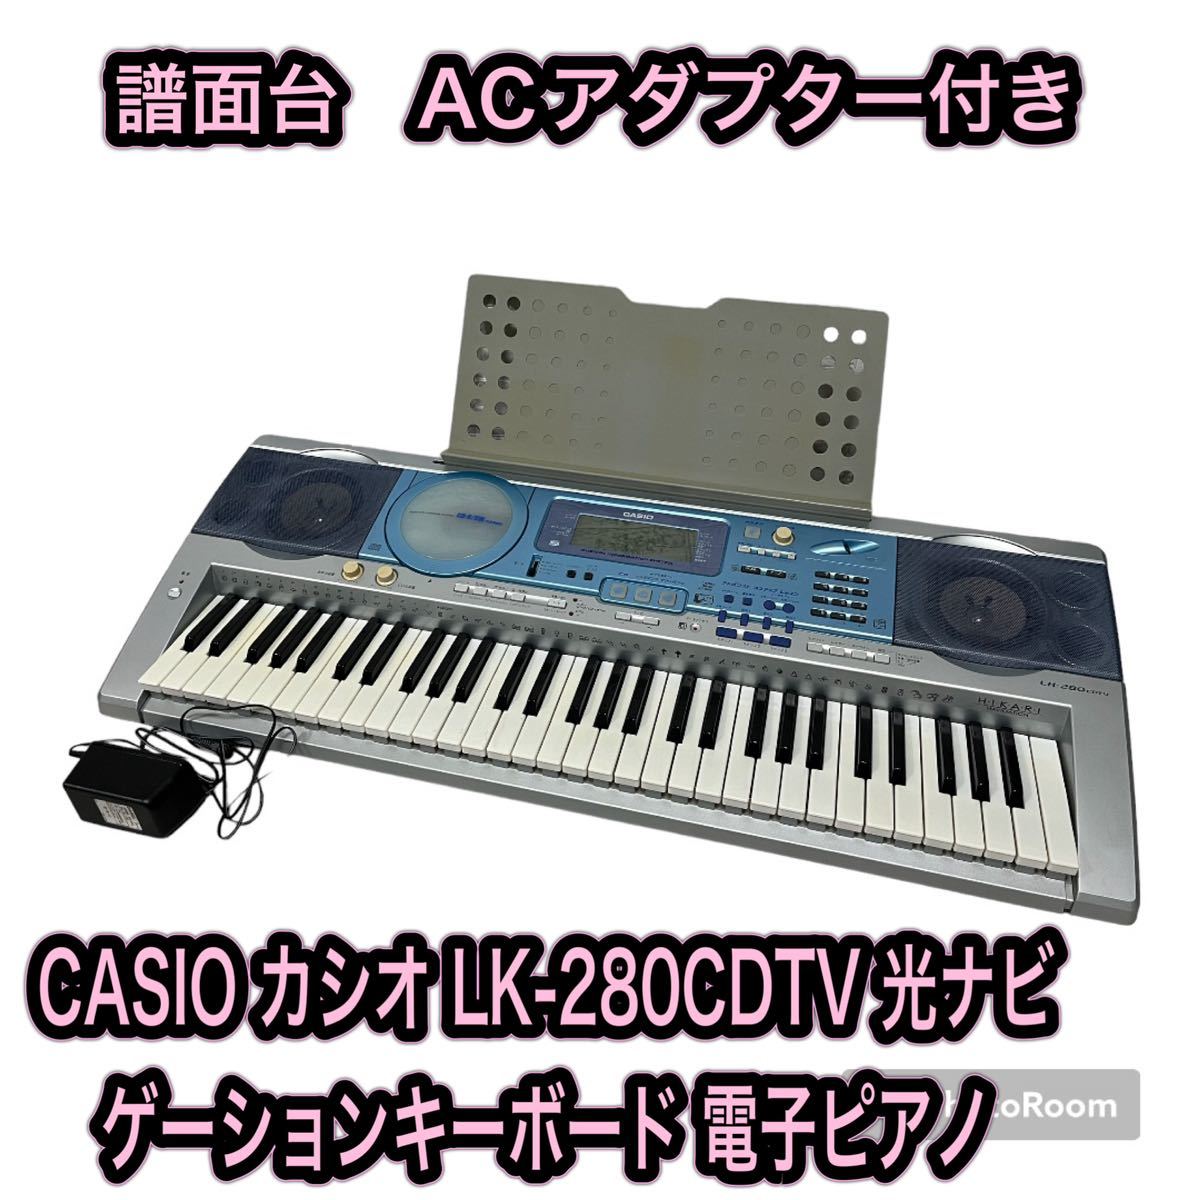 CASIO カシオ LK-280CDTV 光ナビゲーションキーボード 電子ピアノ